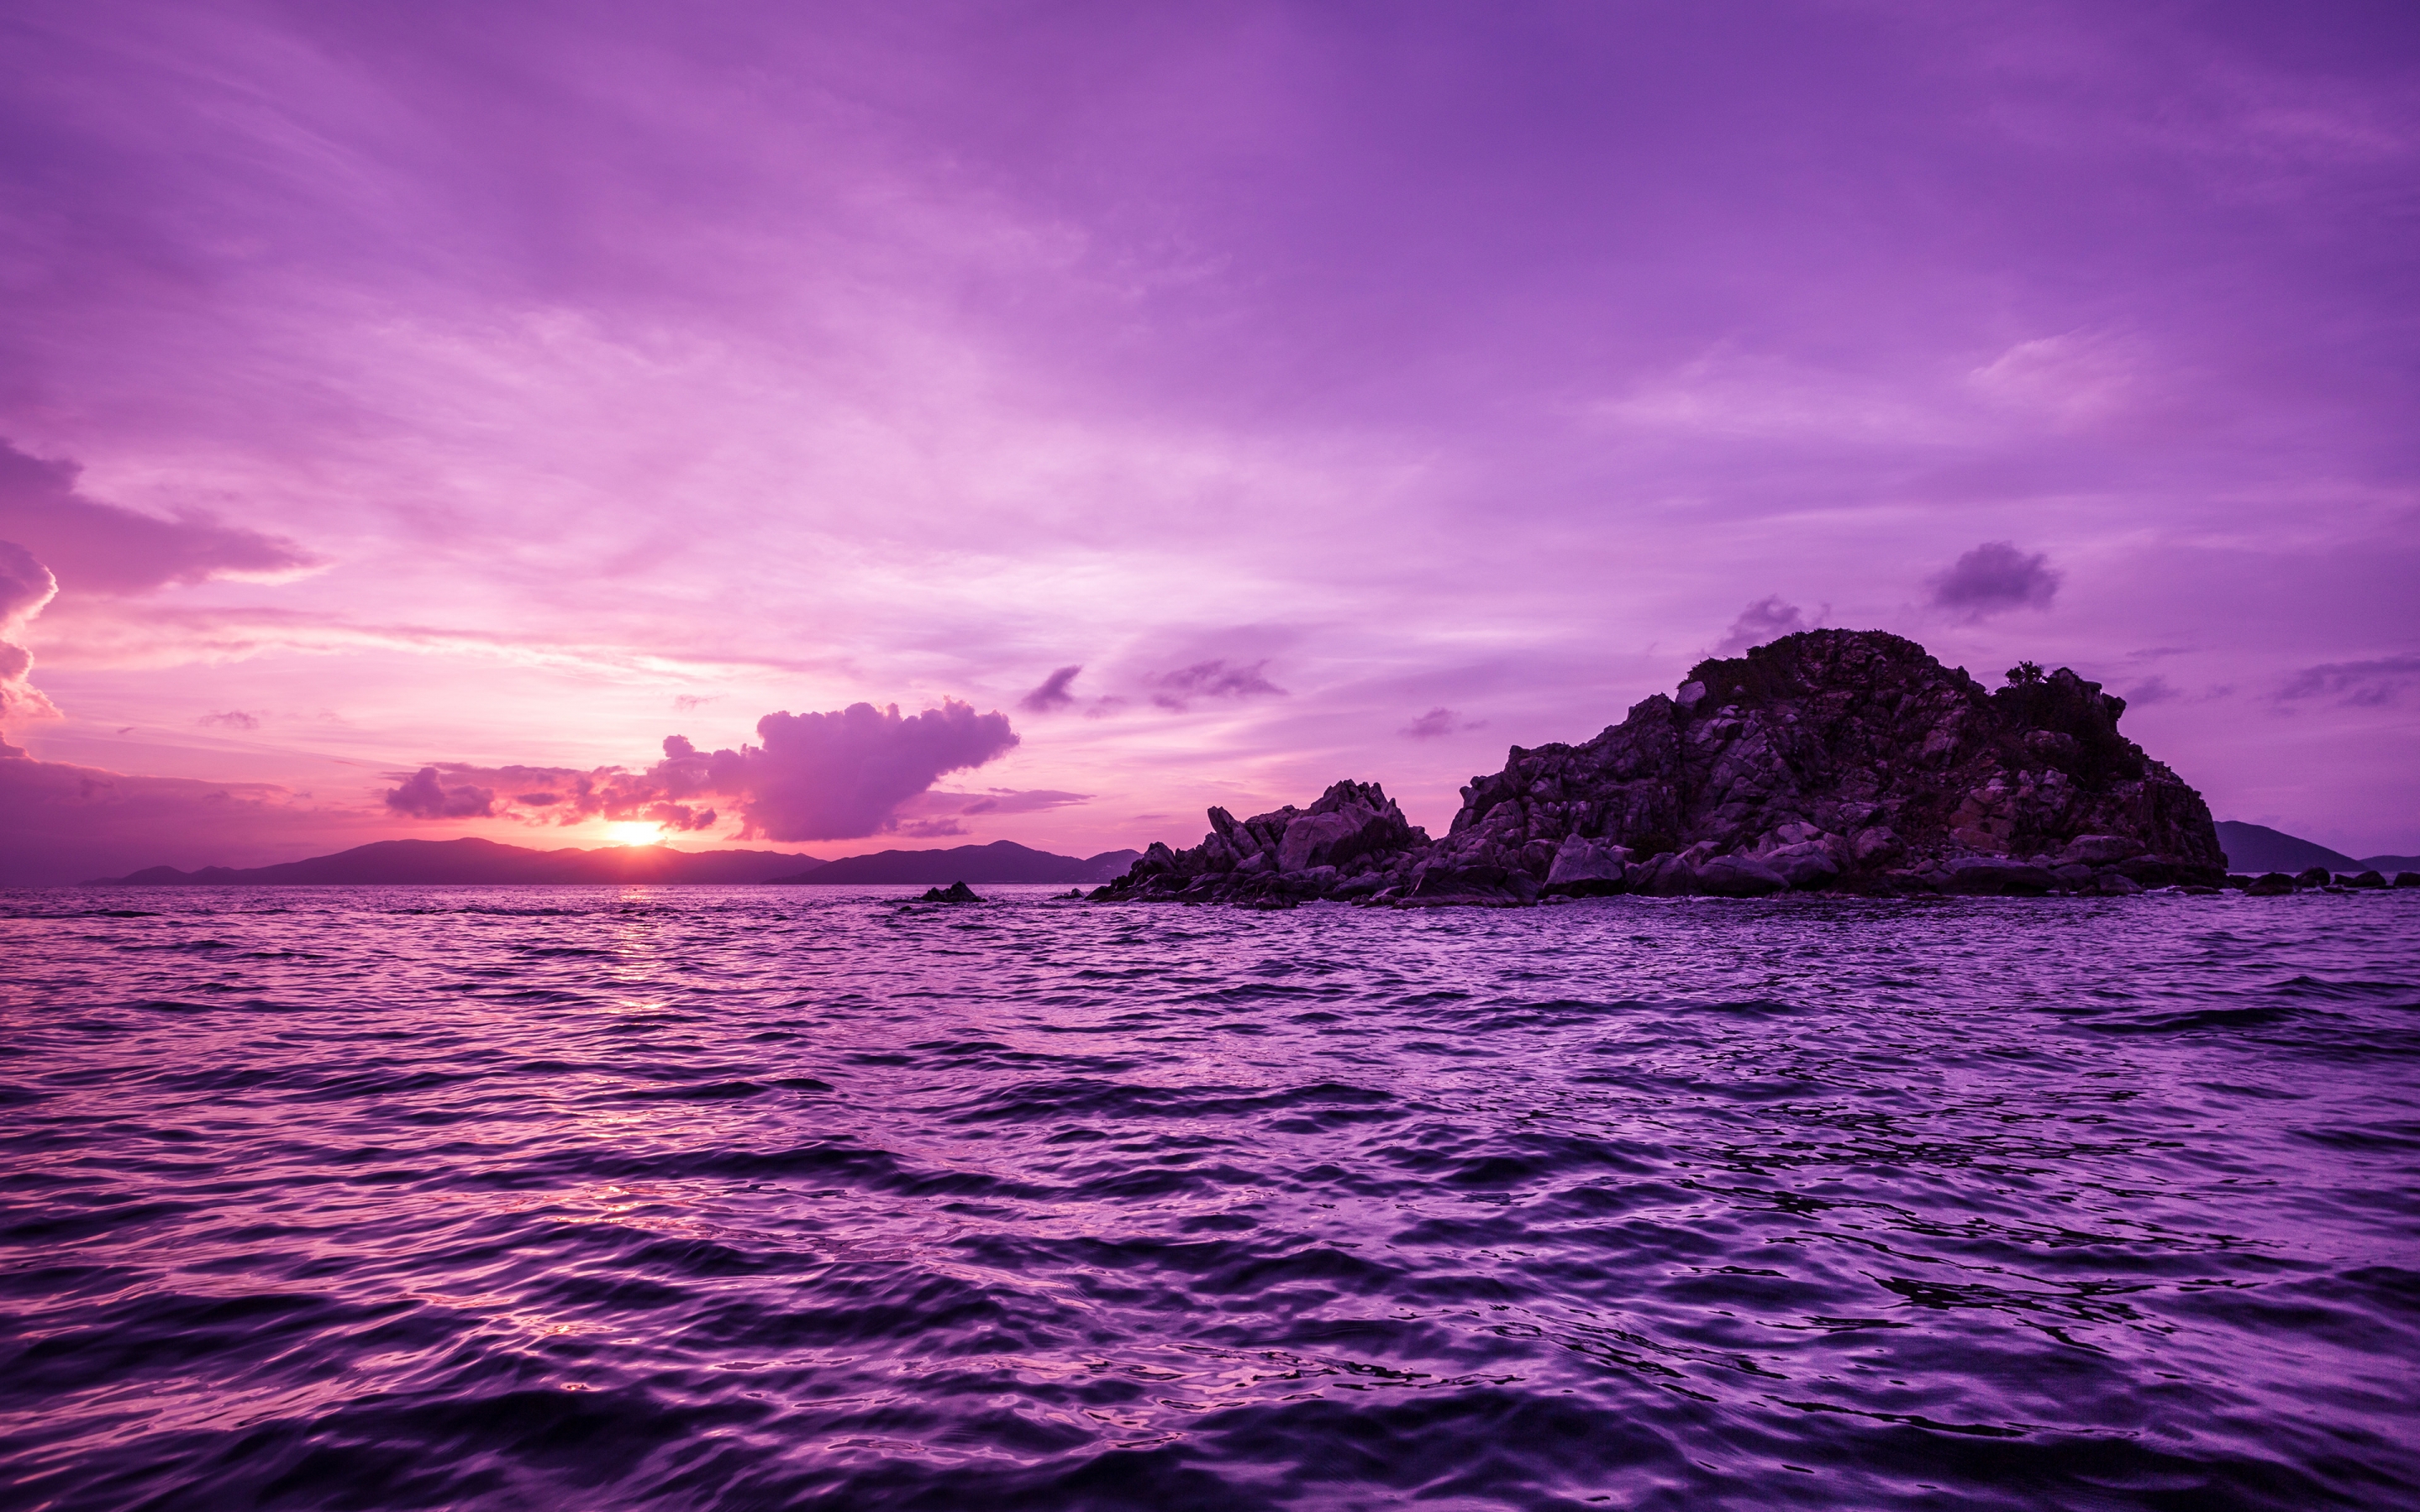 Pelican Island Sunset for 2880 x 1800 Retina Display resolution